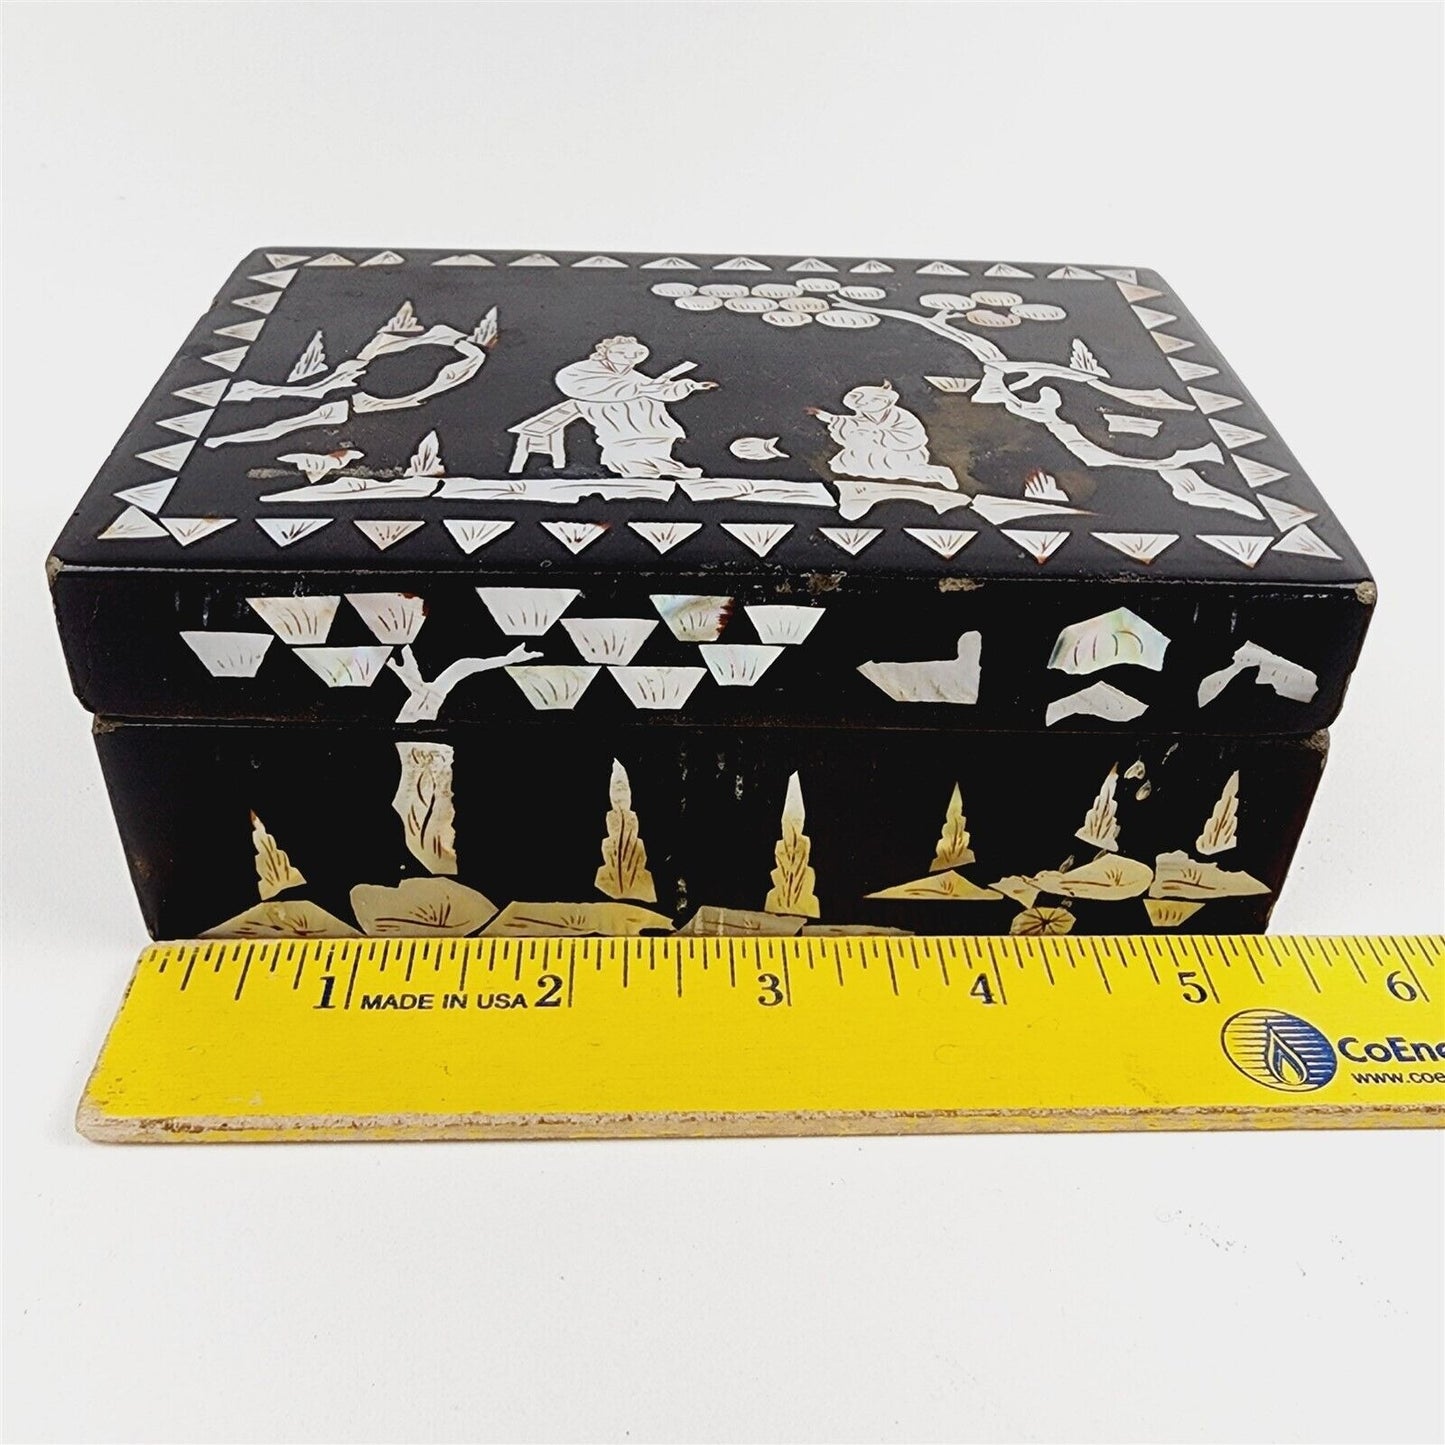 Vintage Lacquer Mother of Pearl Inlay Black Box Keepsake Trinket